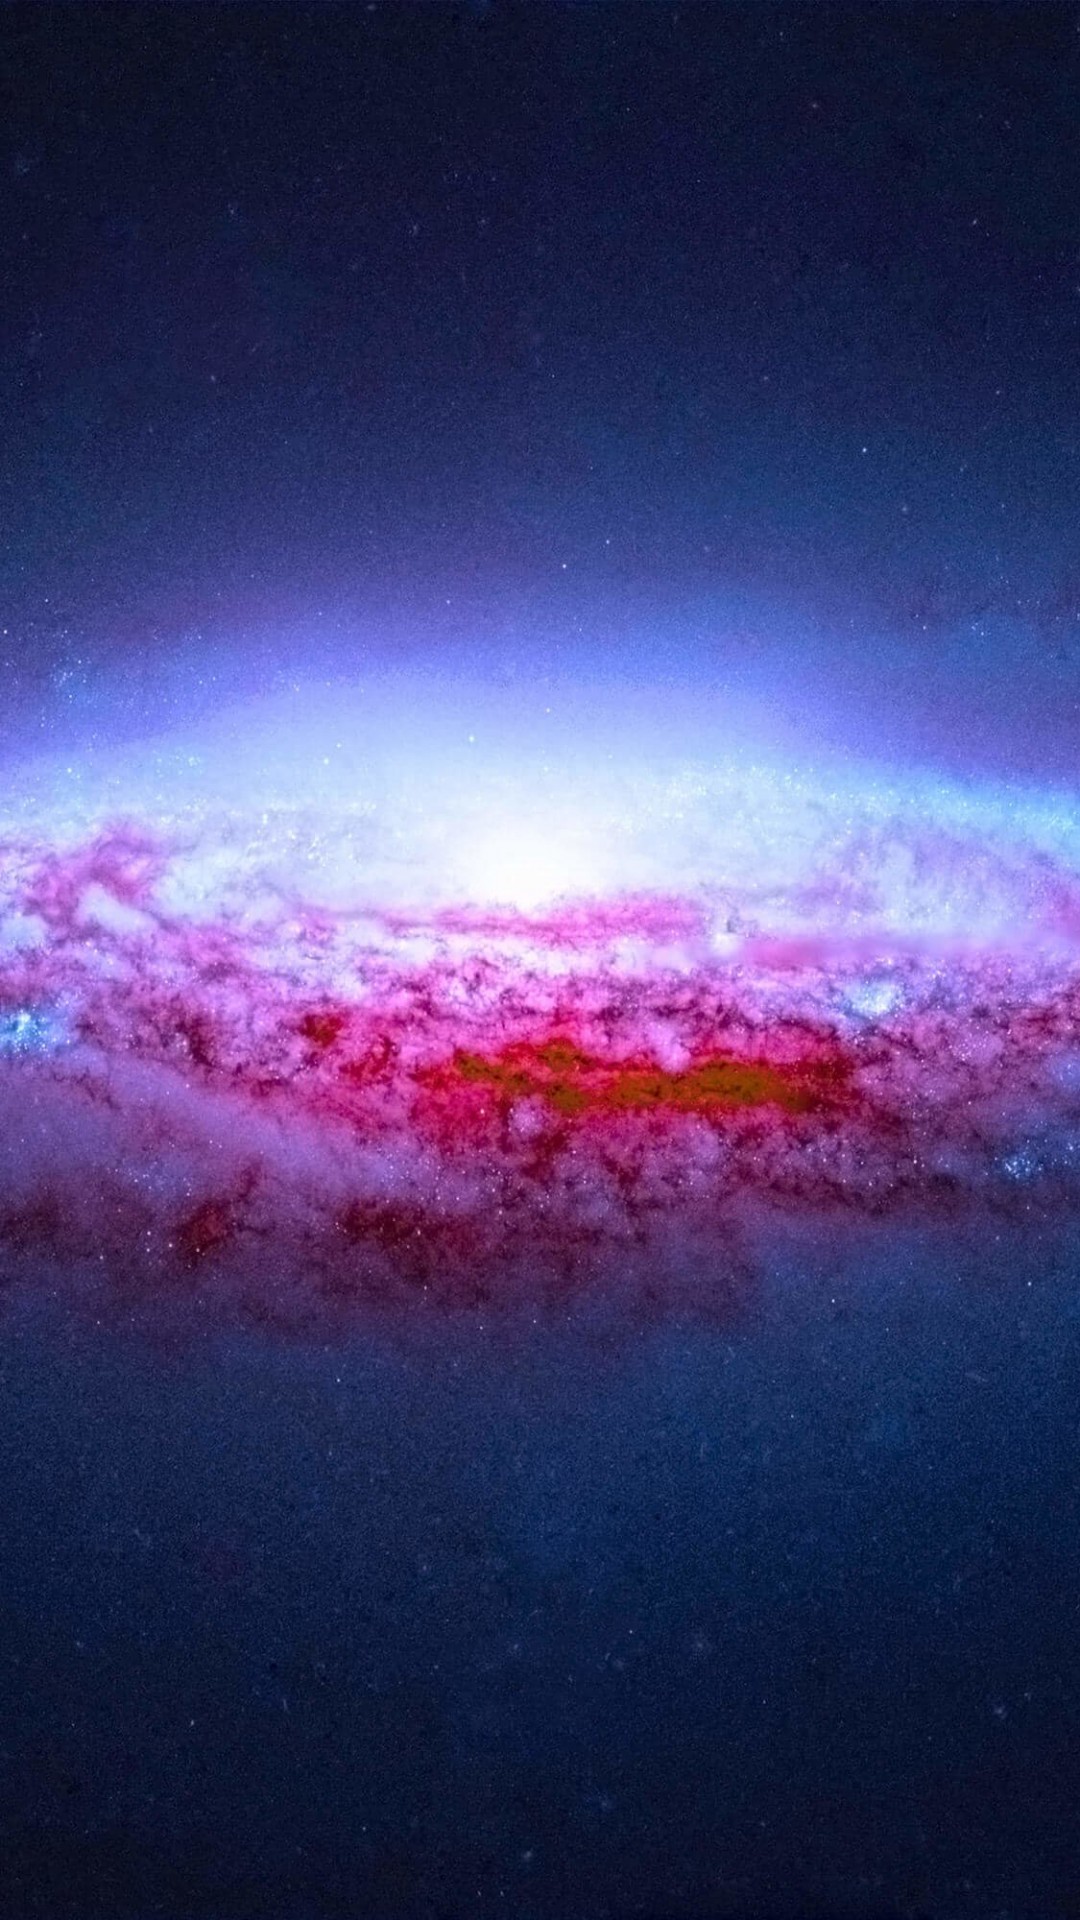 NGC 2683 Spiral Galaxy Wallpaper for Google Nexus 5X